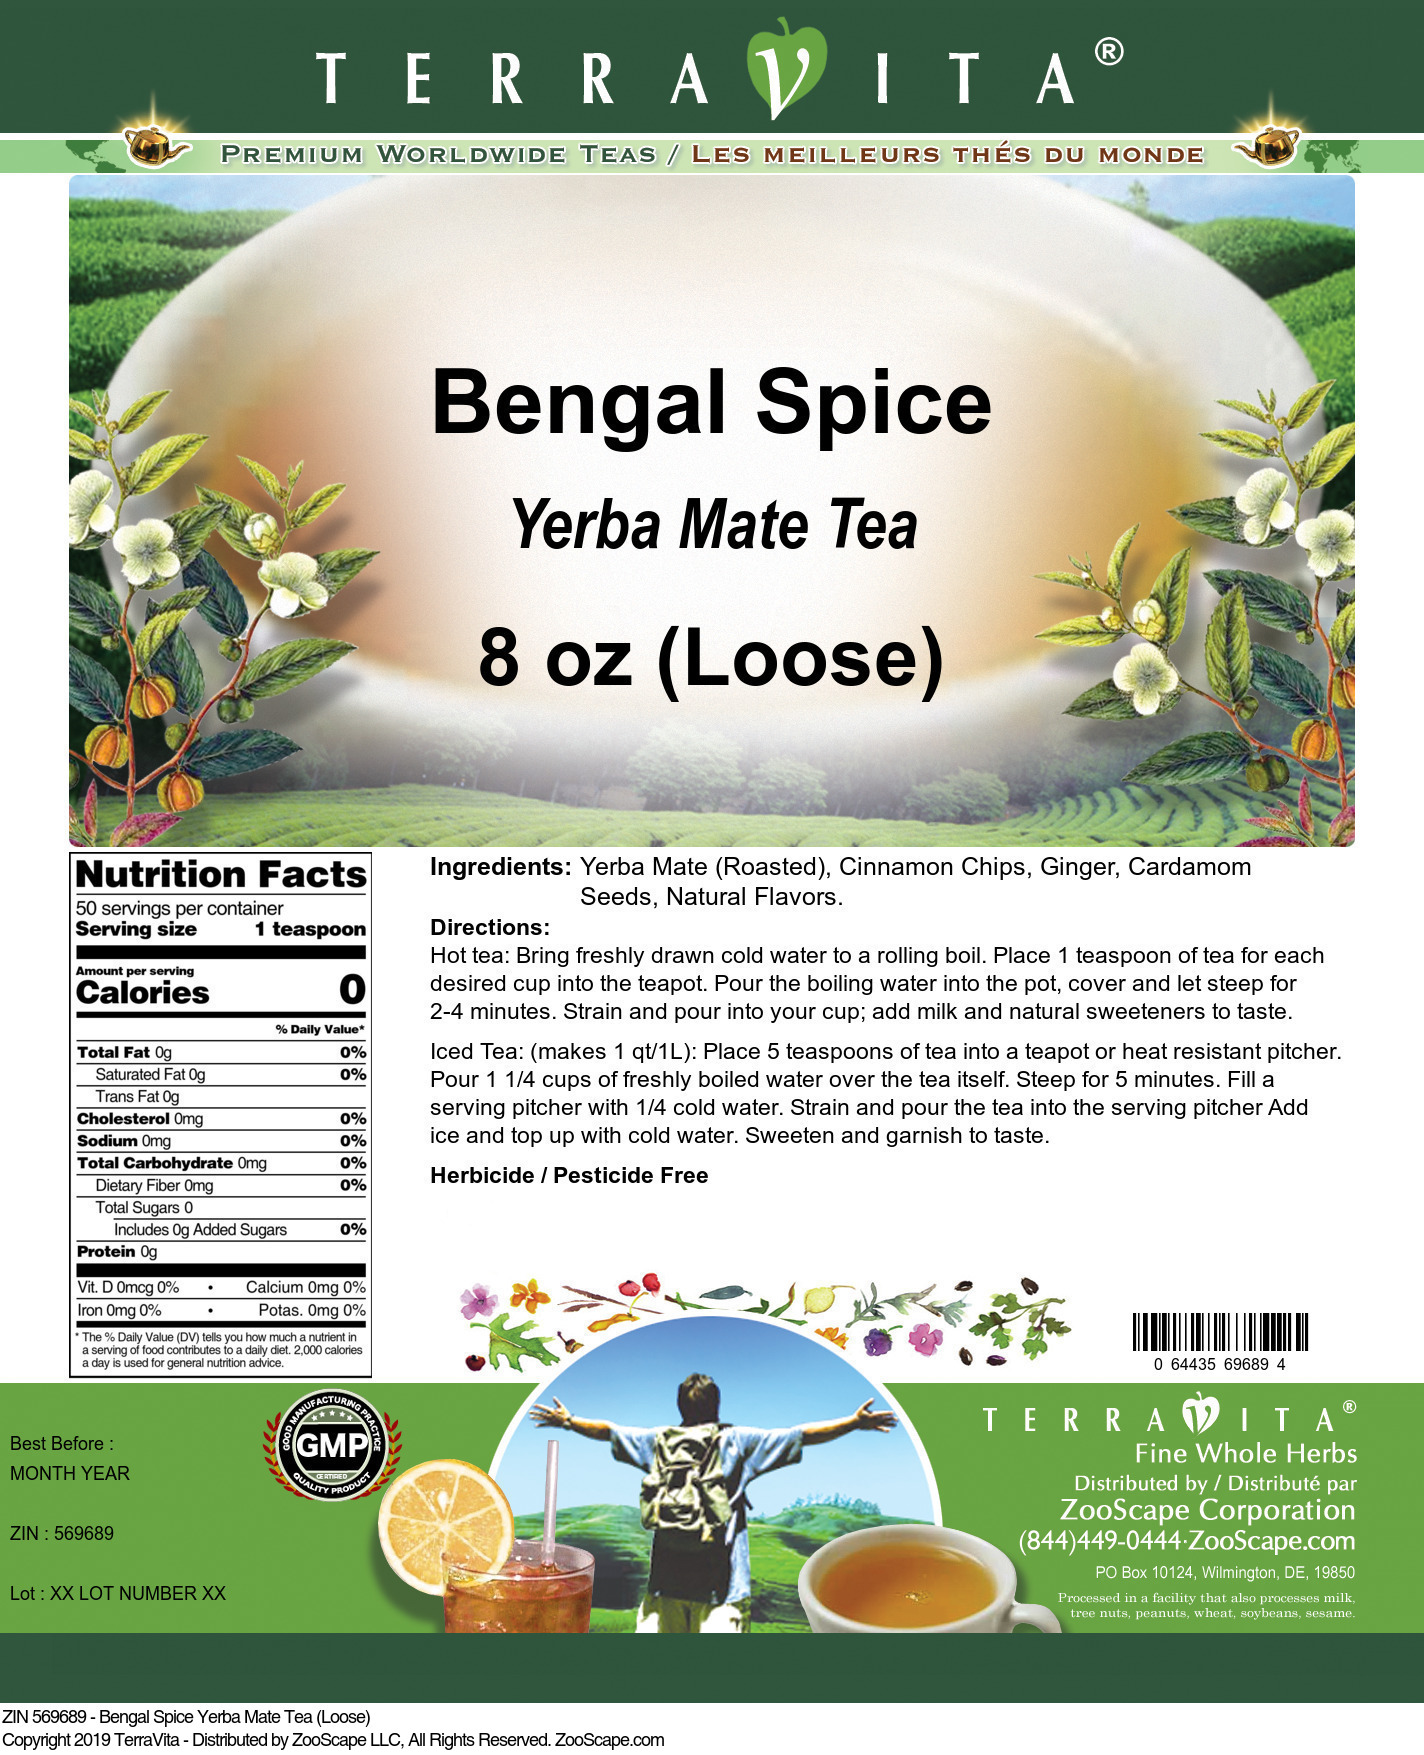 Bengal Spice Yerba Mate Tea (Loose) - Label